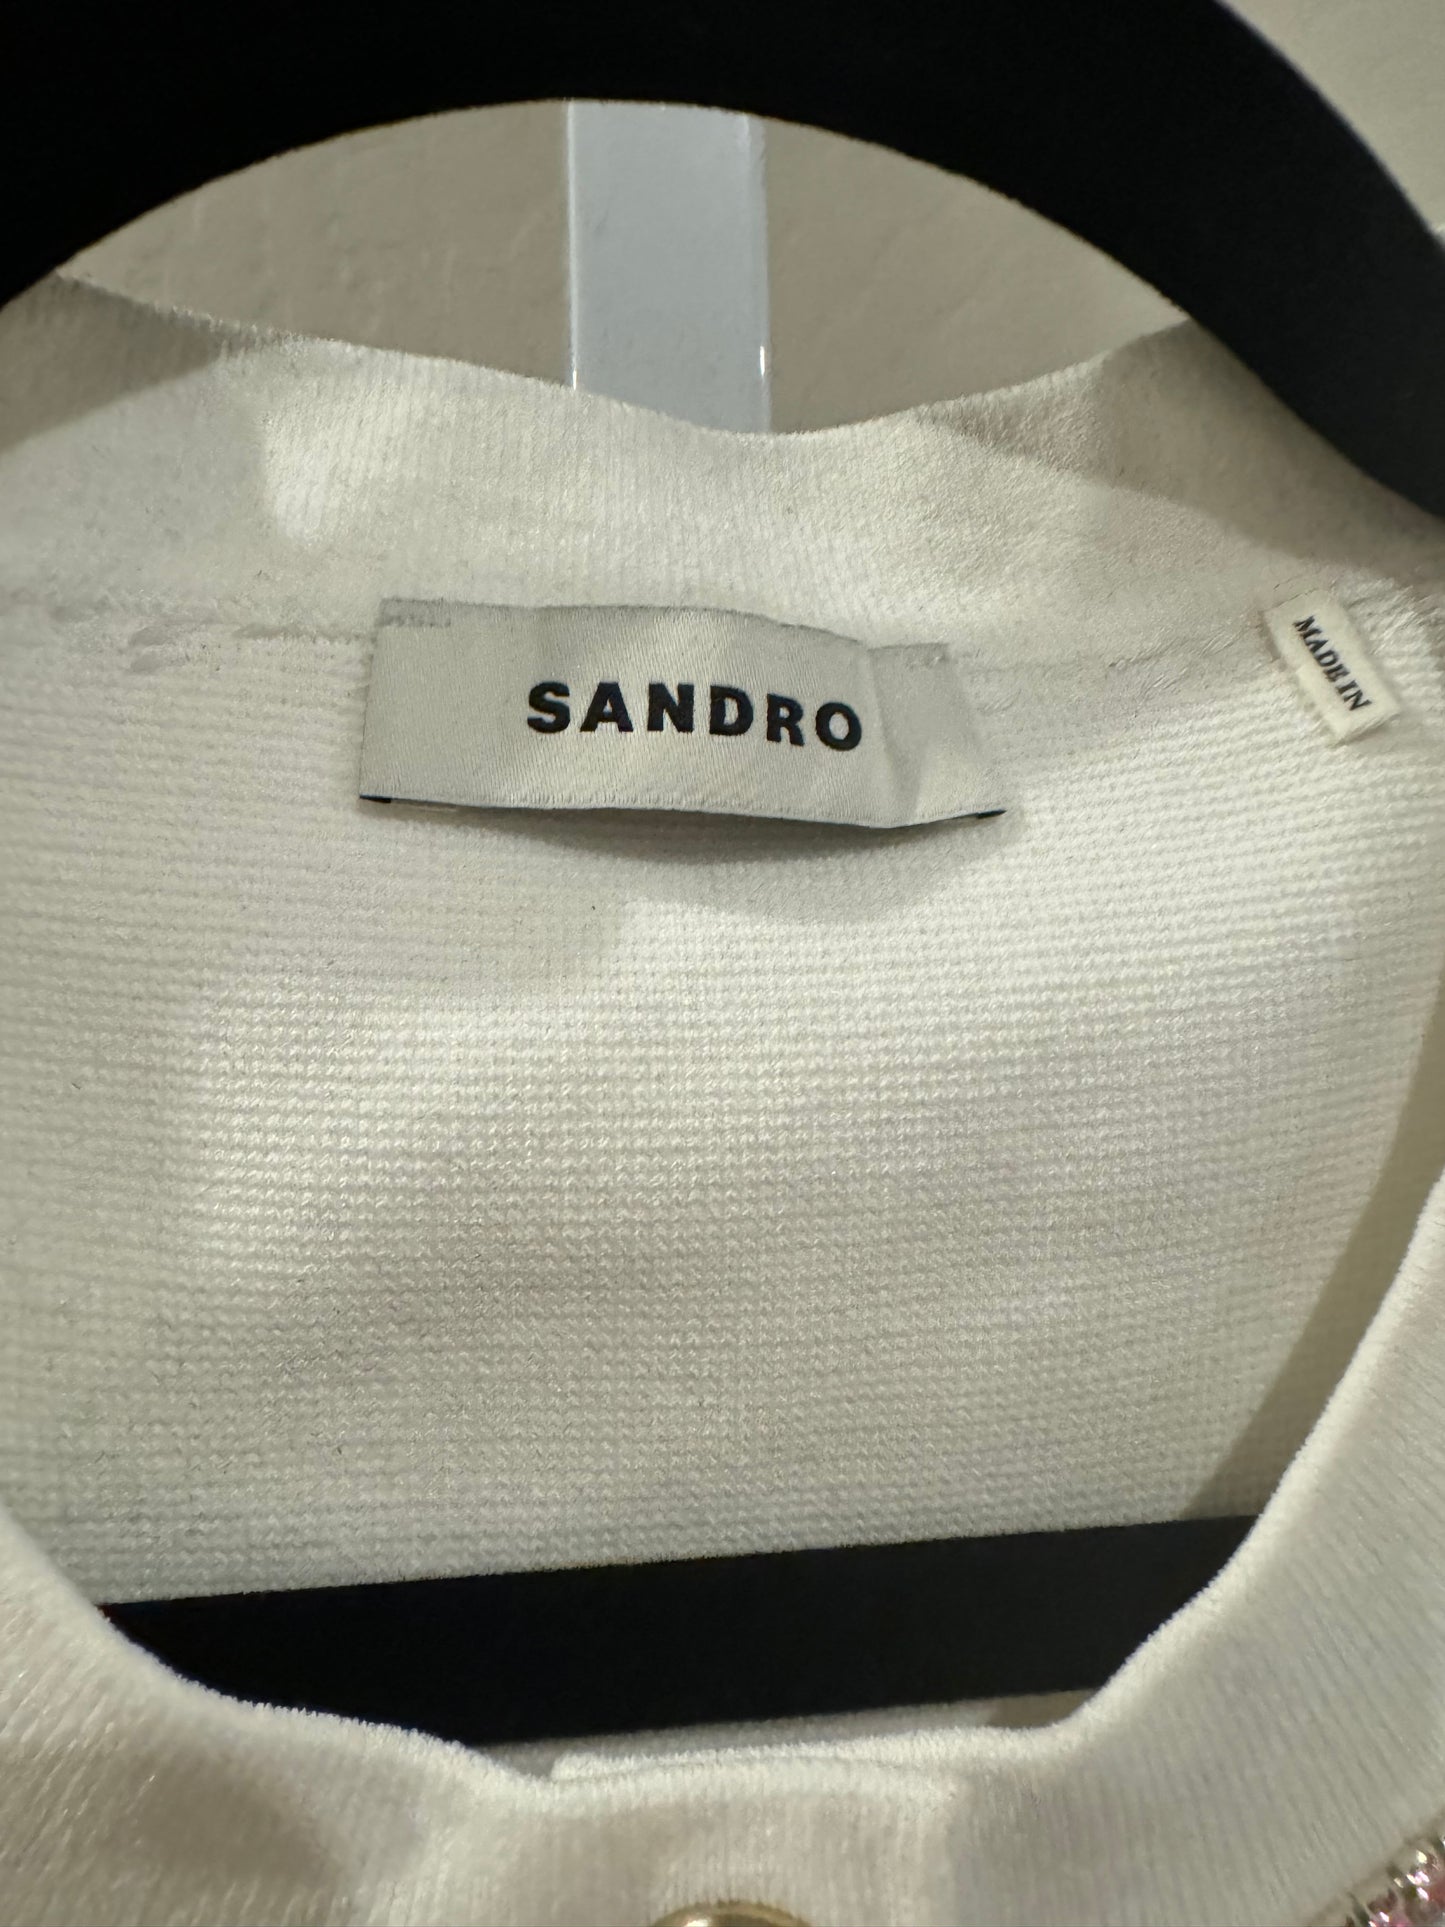 SANDRO Elsa Cropped Cardigan (New) Size: 2/M